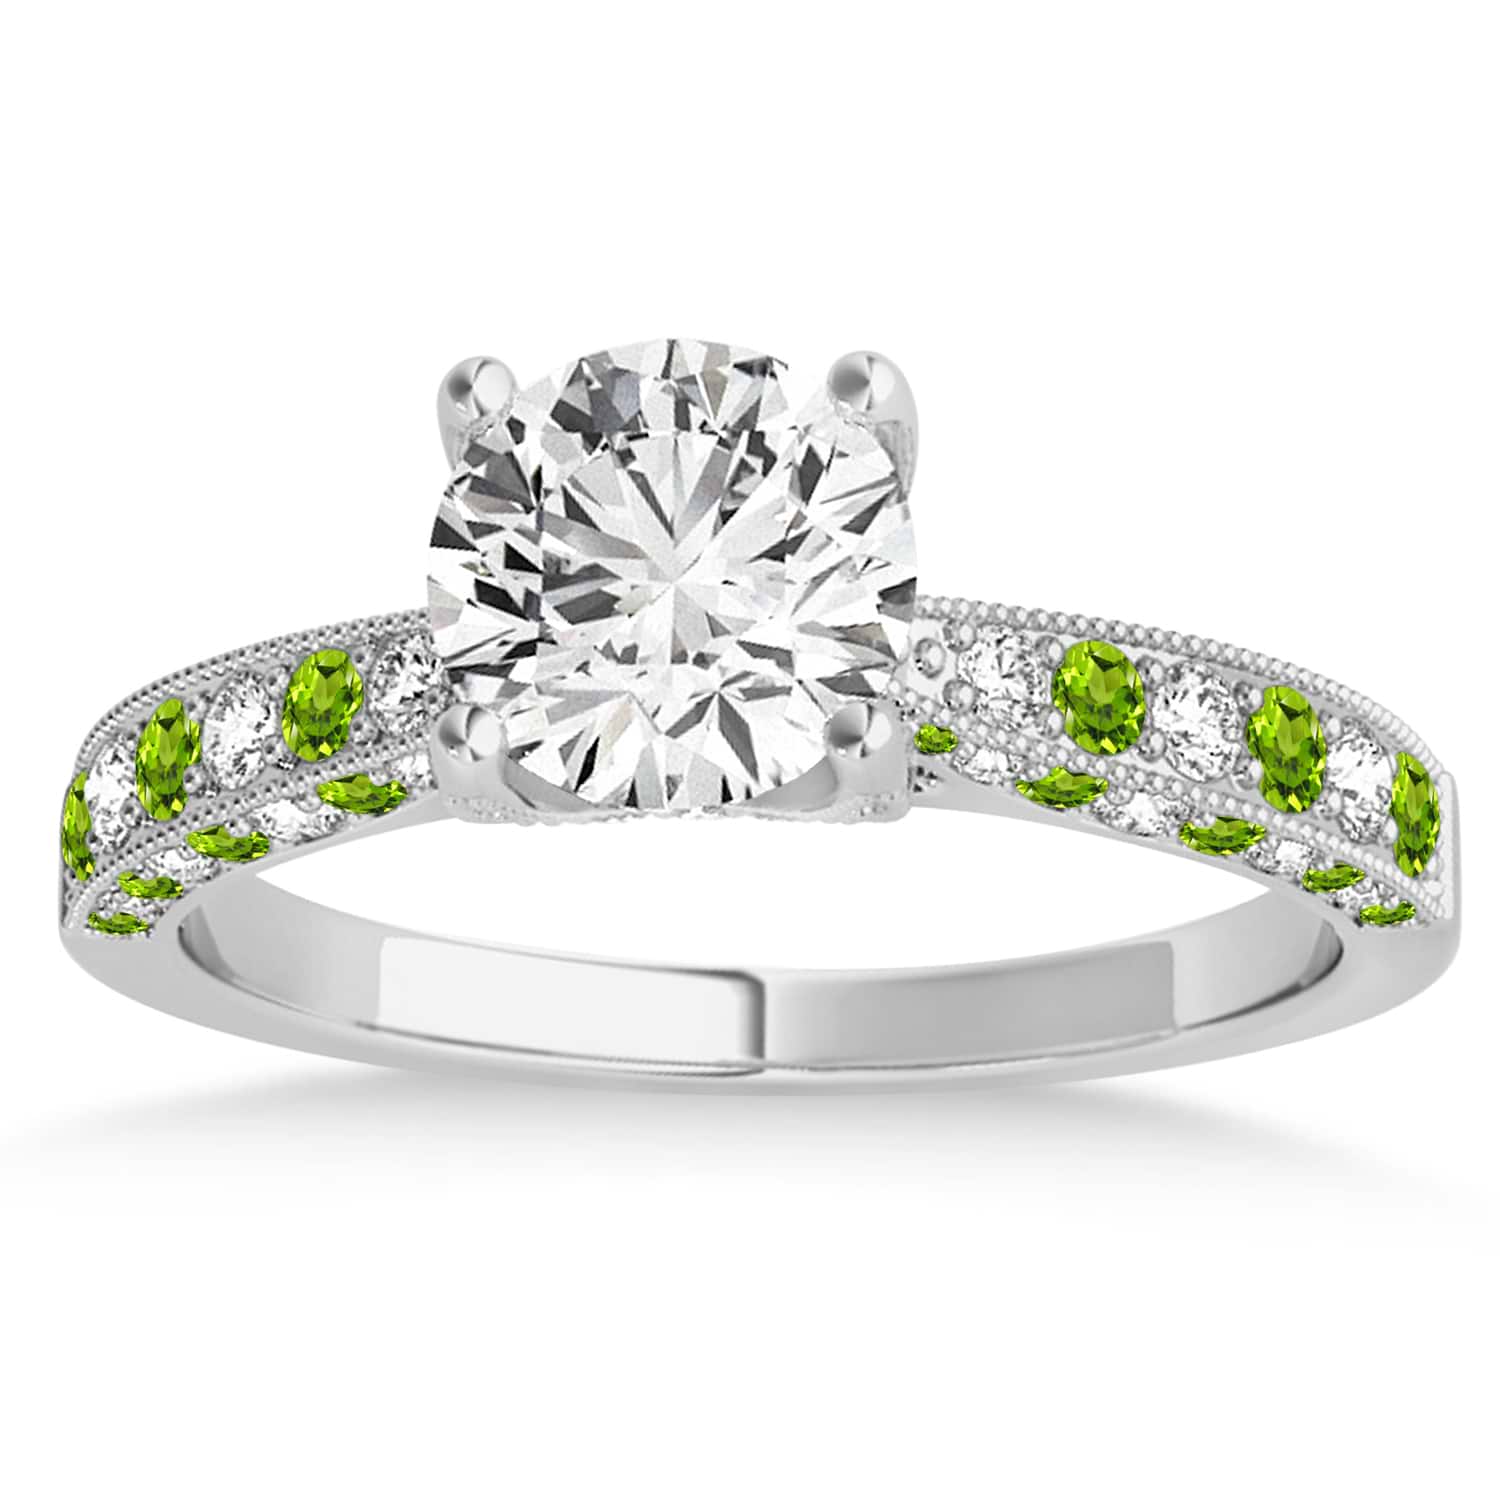 Alternating Diamond & Peridot Engravable Engagement Ring in Platinum (0.45ct)